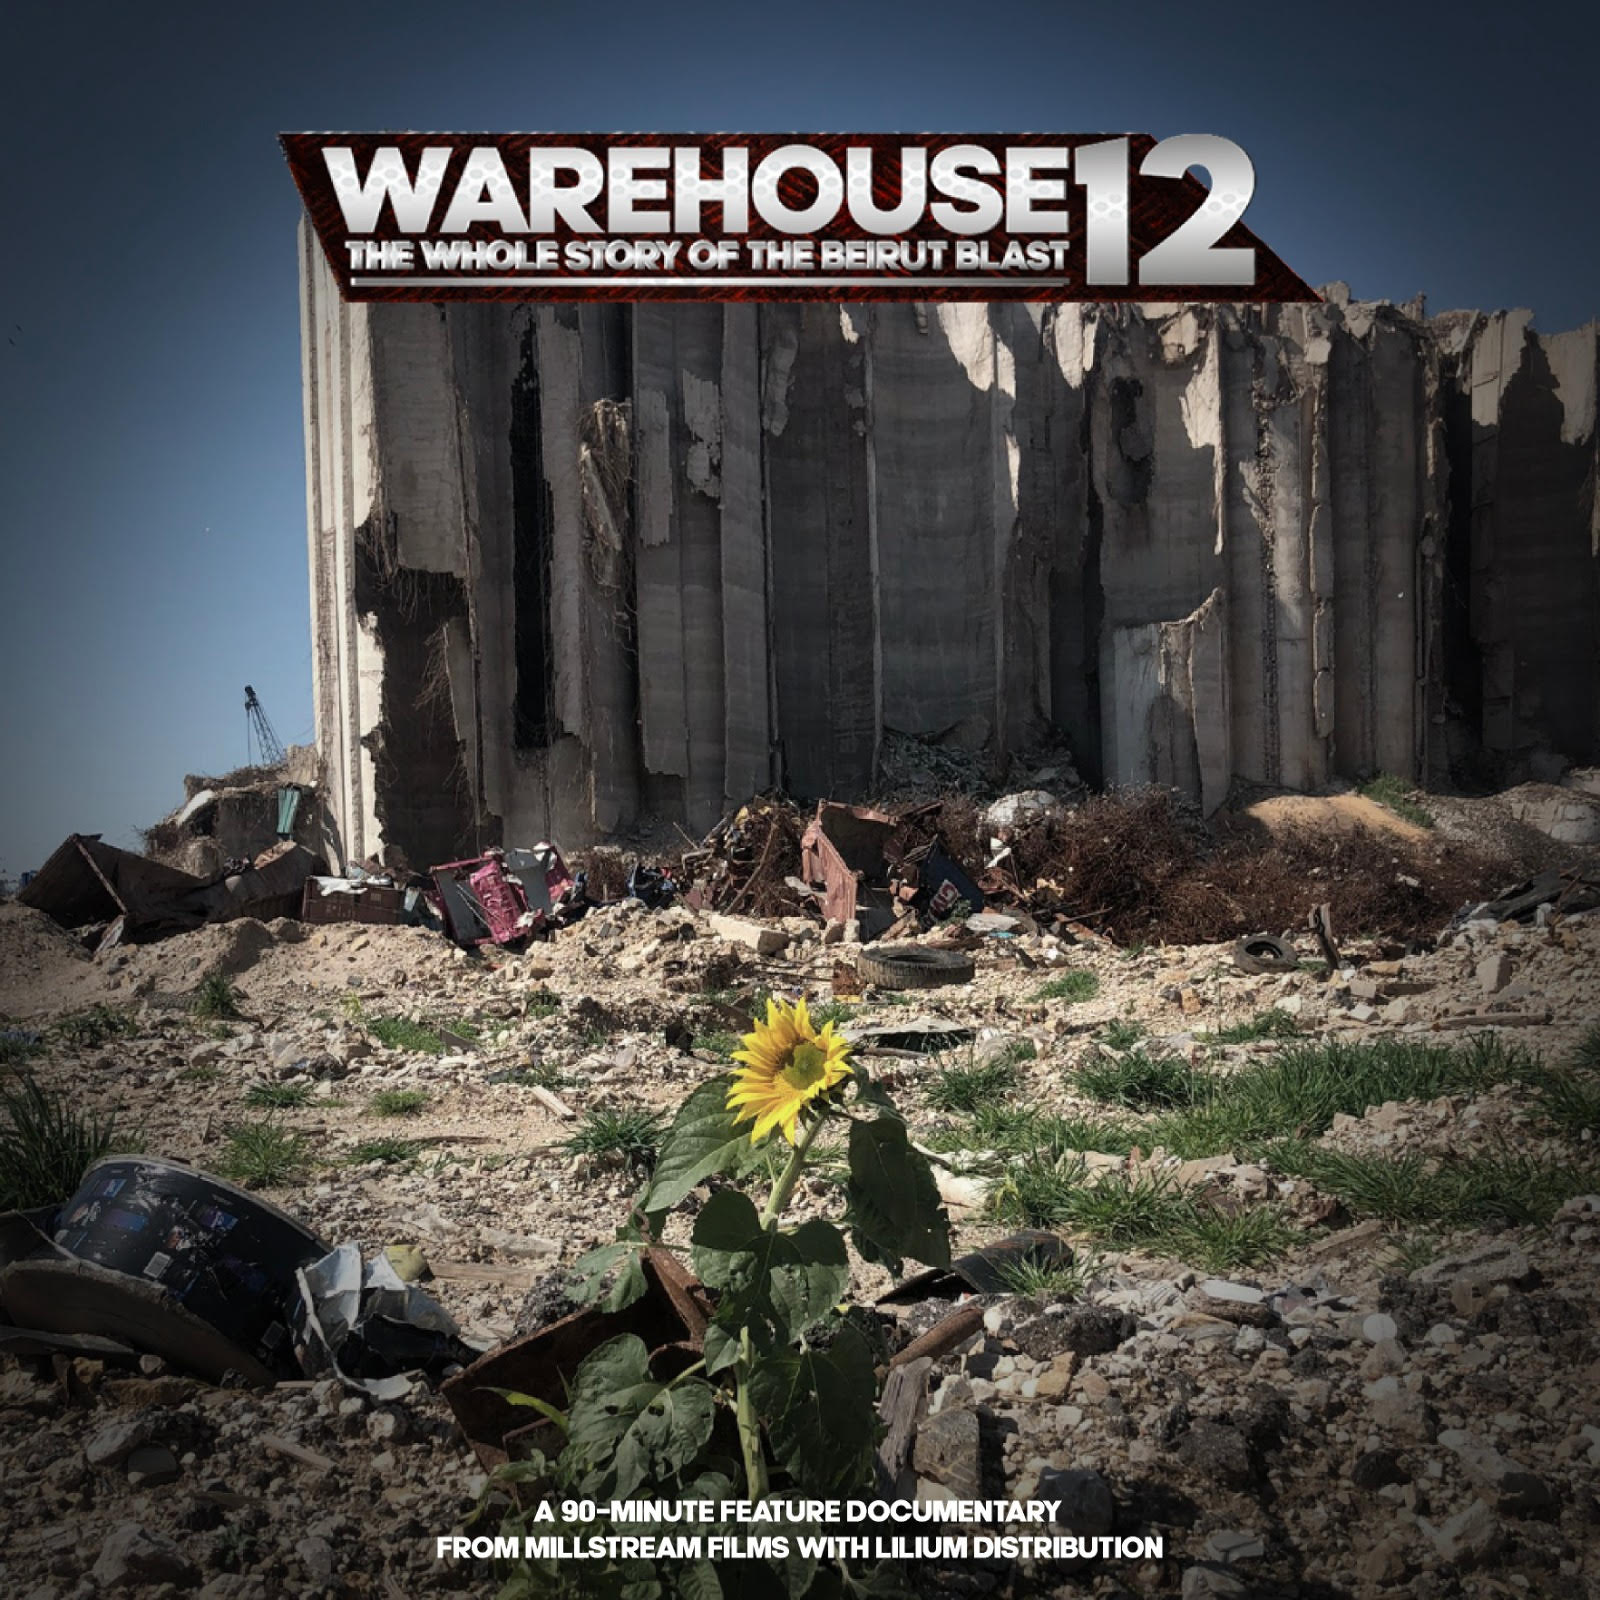 Beirut Blast: The Story of Warehouse 12